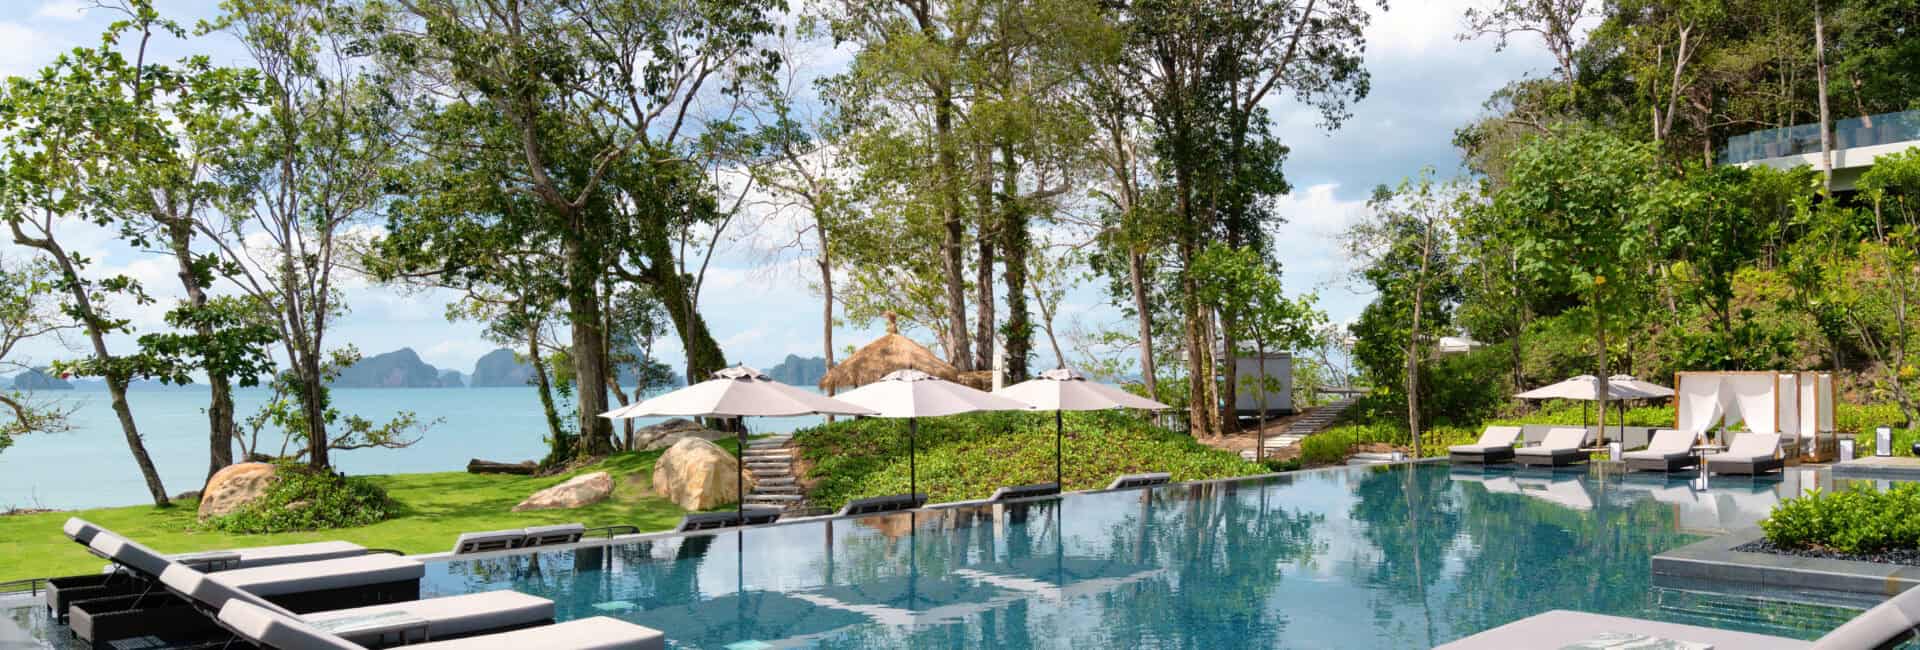 Banyan Tree Krabi - Pool